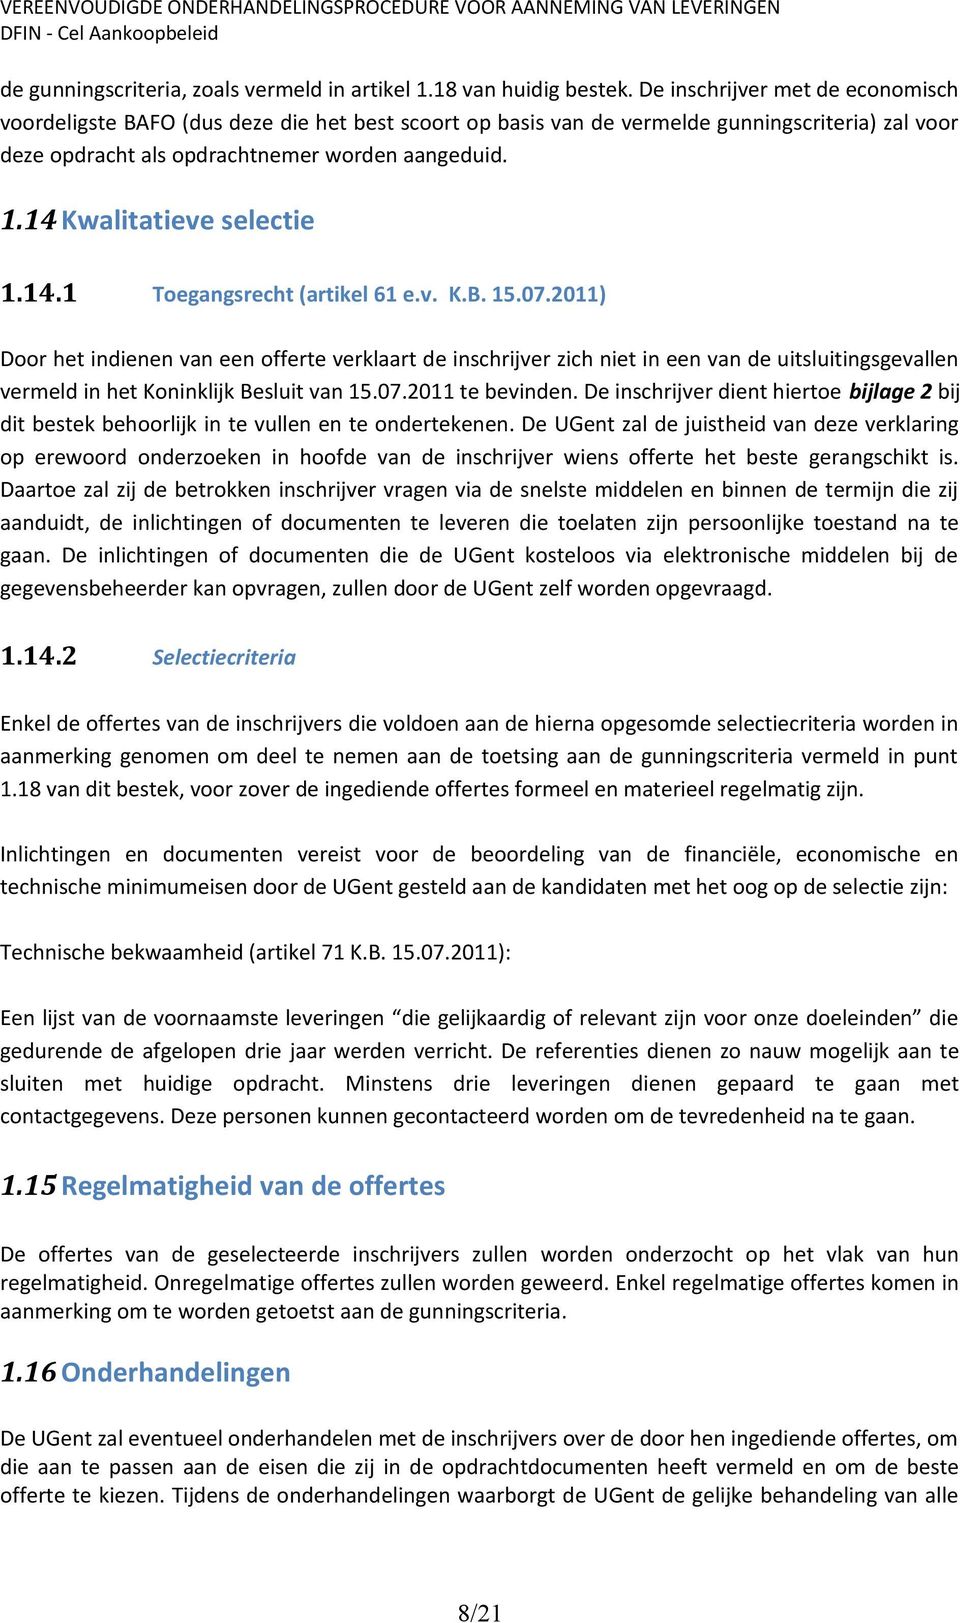 14Kwalitatieve selectie 1.14.1 Toegangsrecht (artikel 61 e.v. K.B. 15.07.